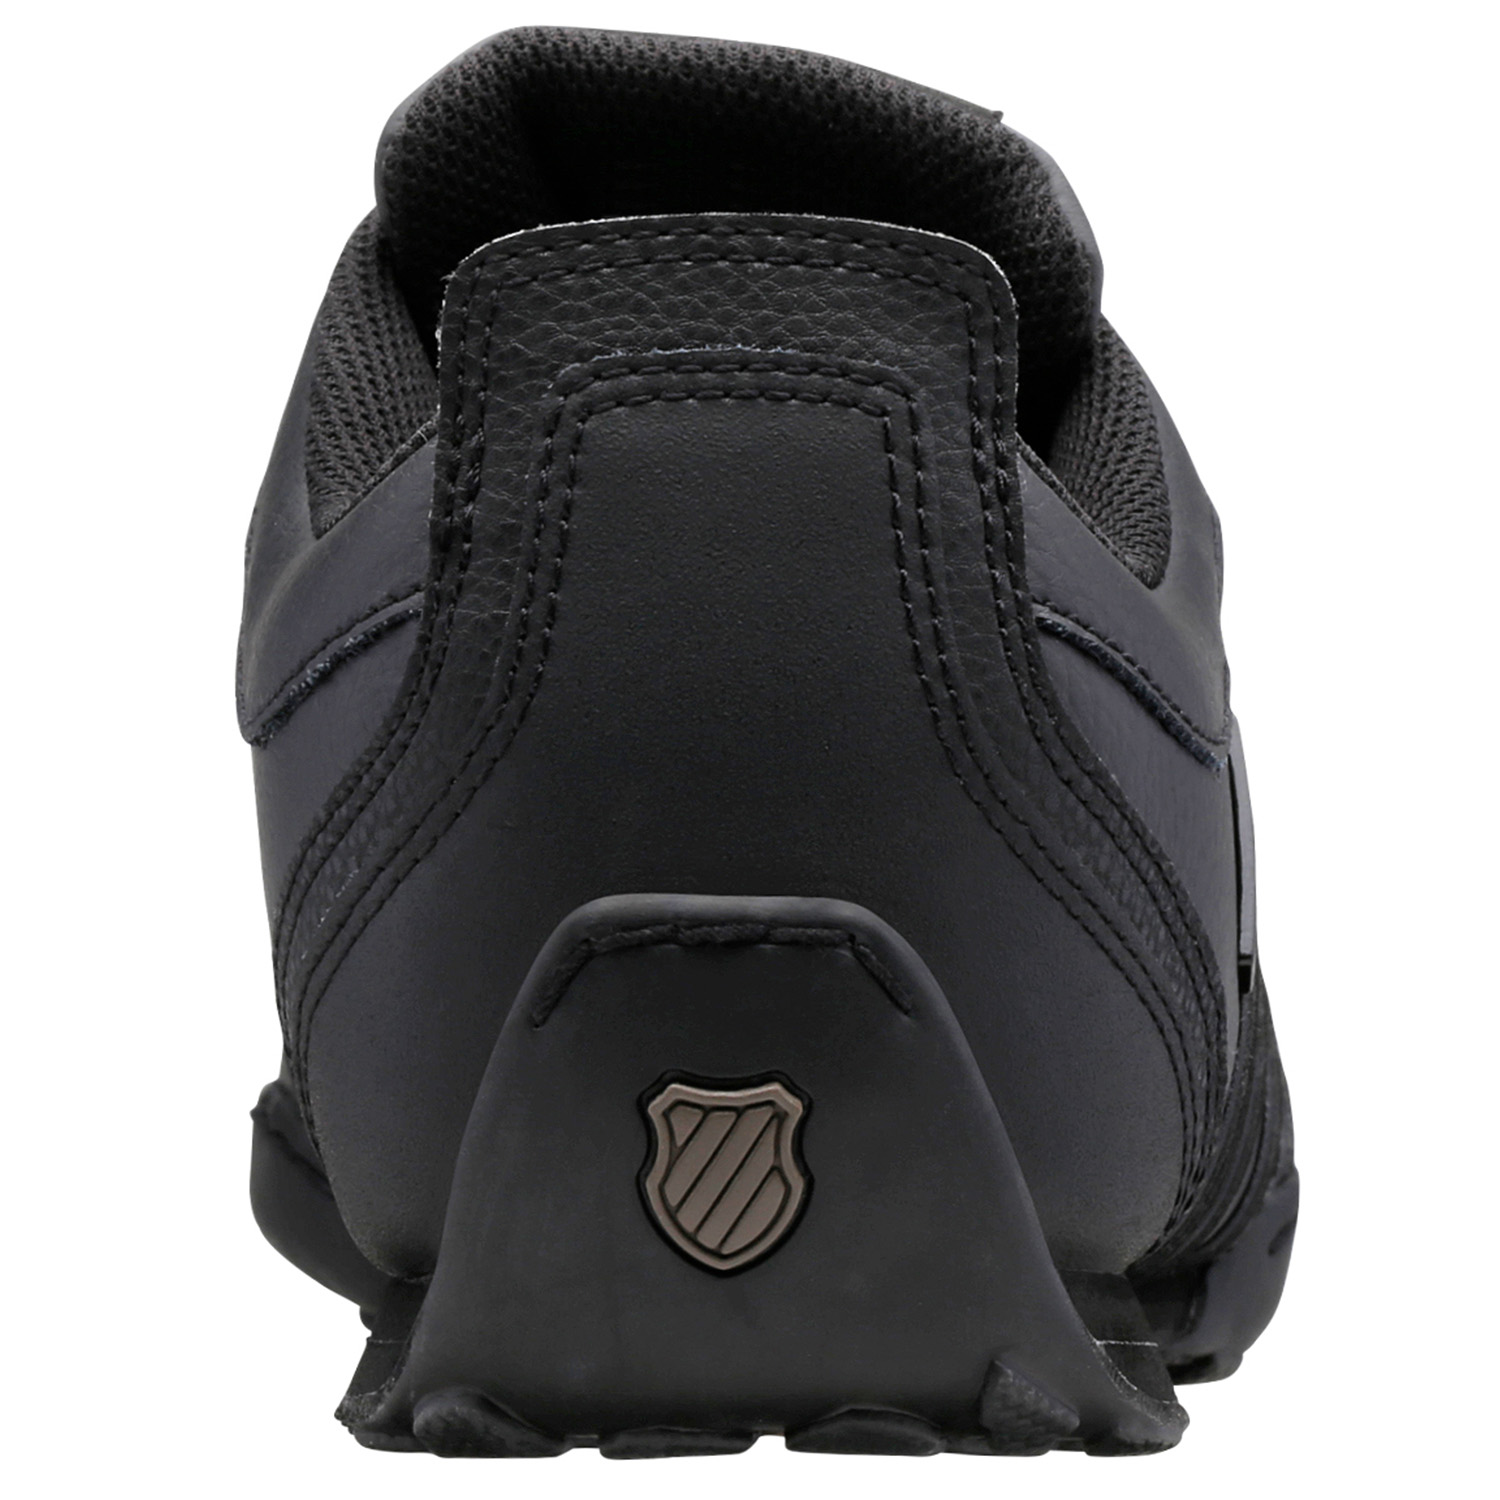 K-SWISS Arvee 1.5 Herren Sneaker Sportschuhe 02453-044-M schwarz